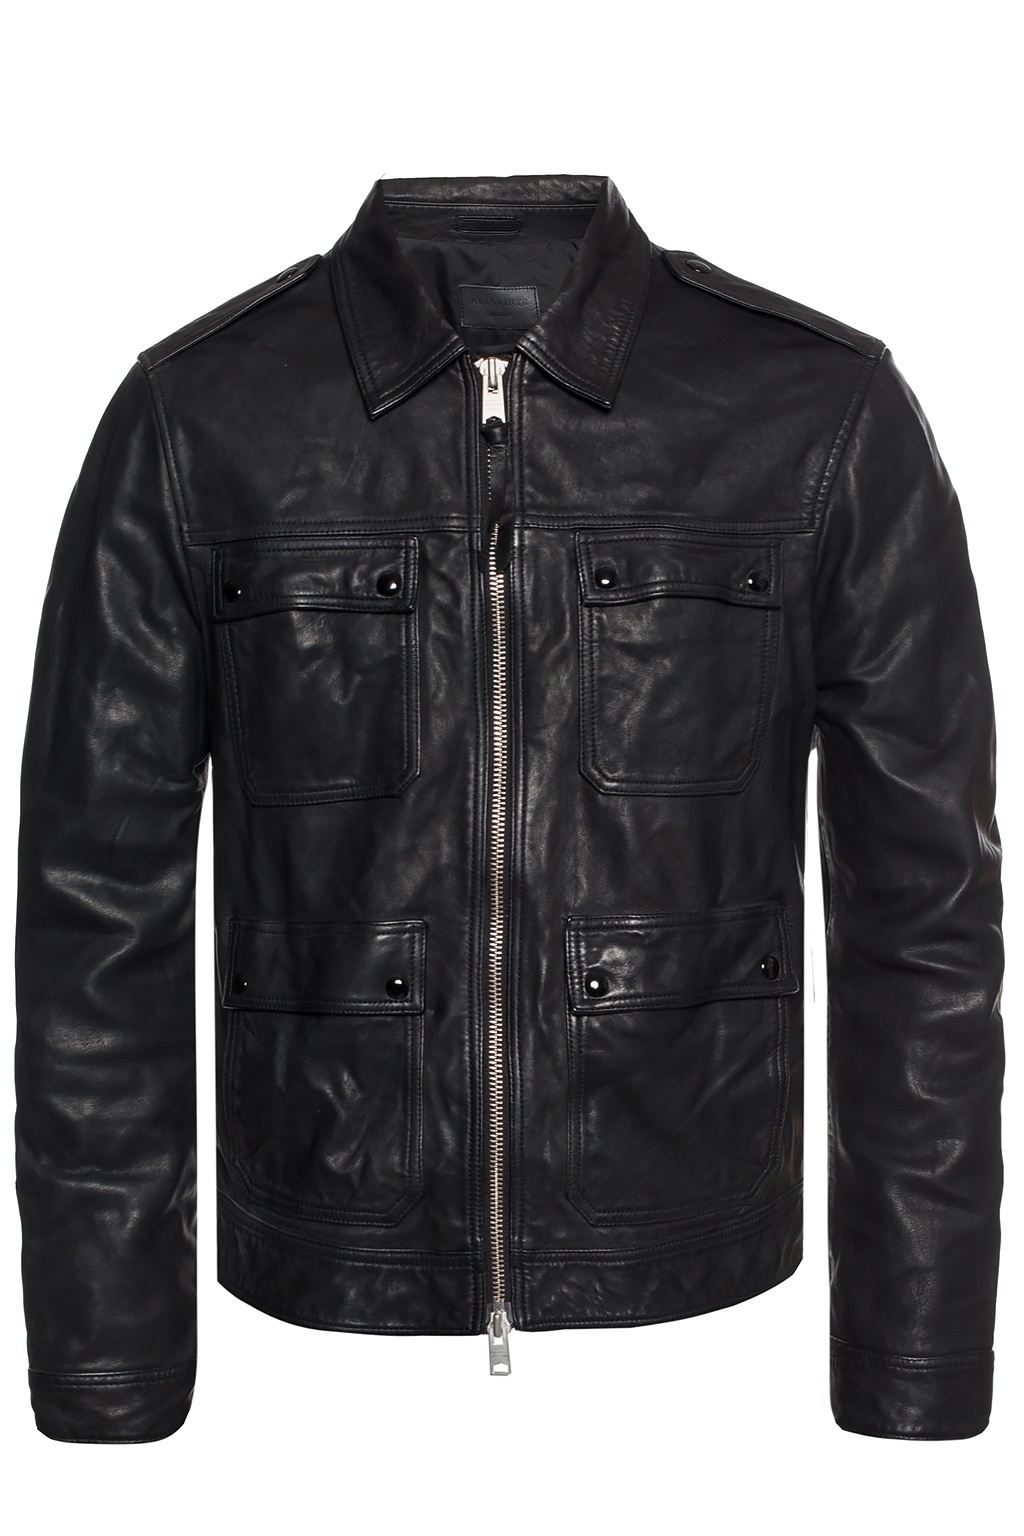 ‘Kage’ leather jacket AllSaints - Vitkac Spain